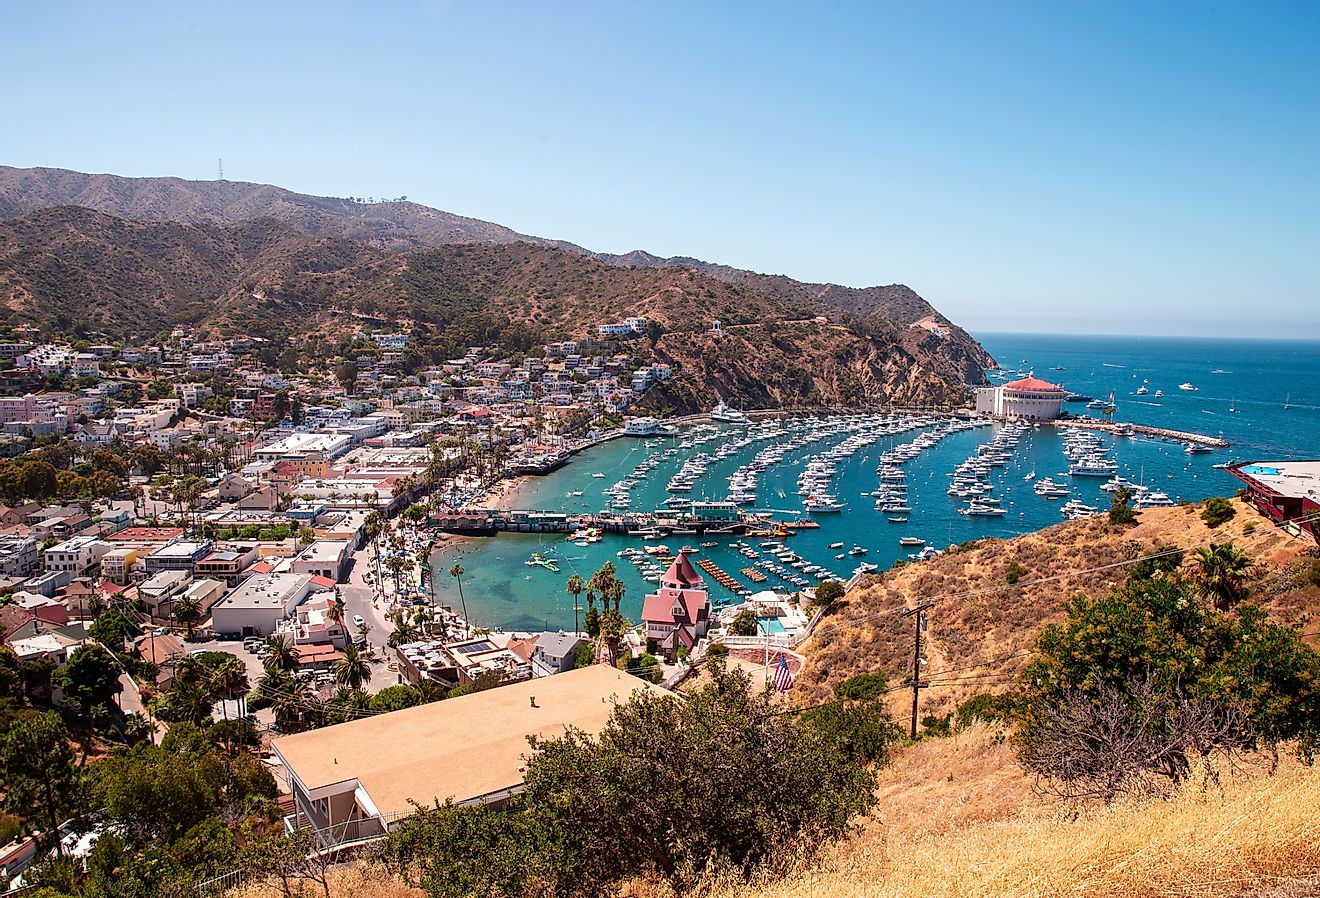 Aerial shot of Catalina Island in California. Image credit Henry Skinner via Shutterstock.